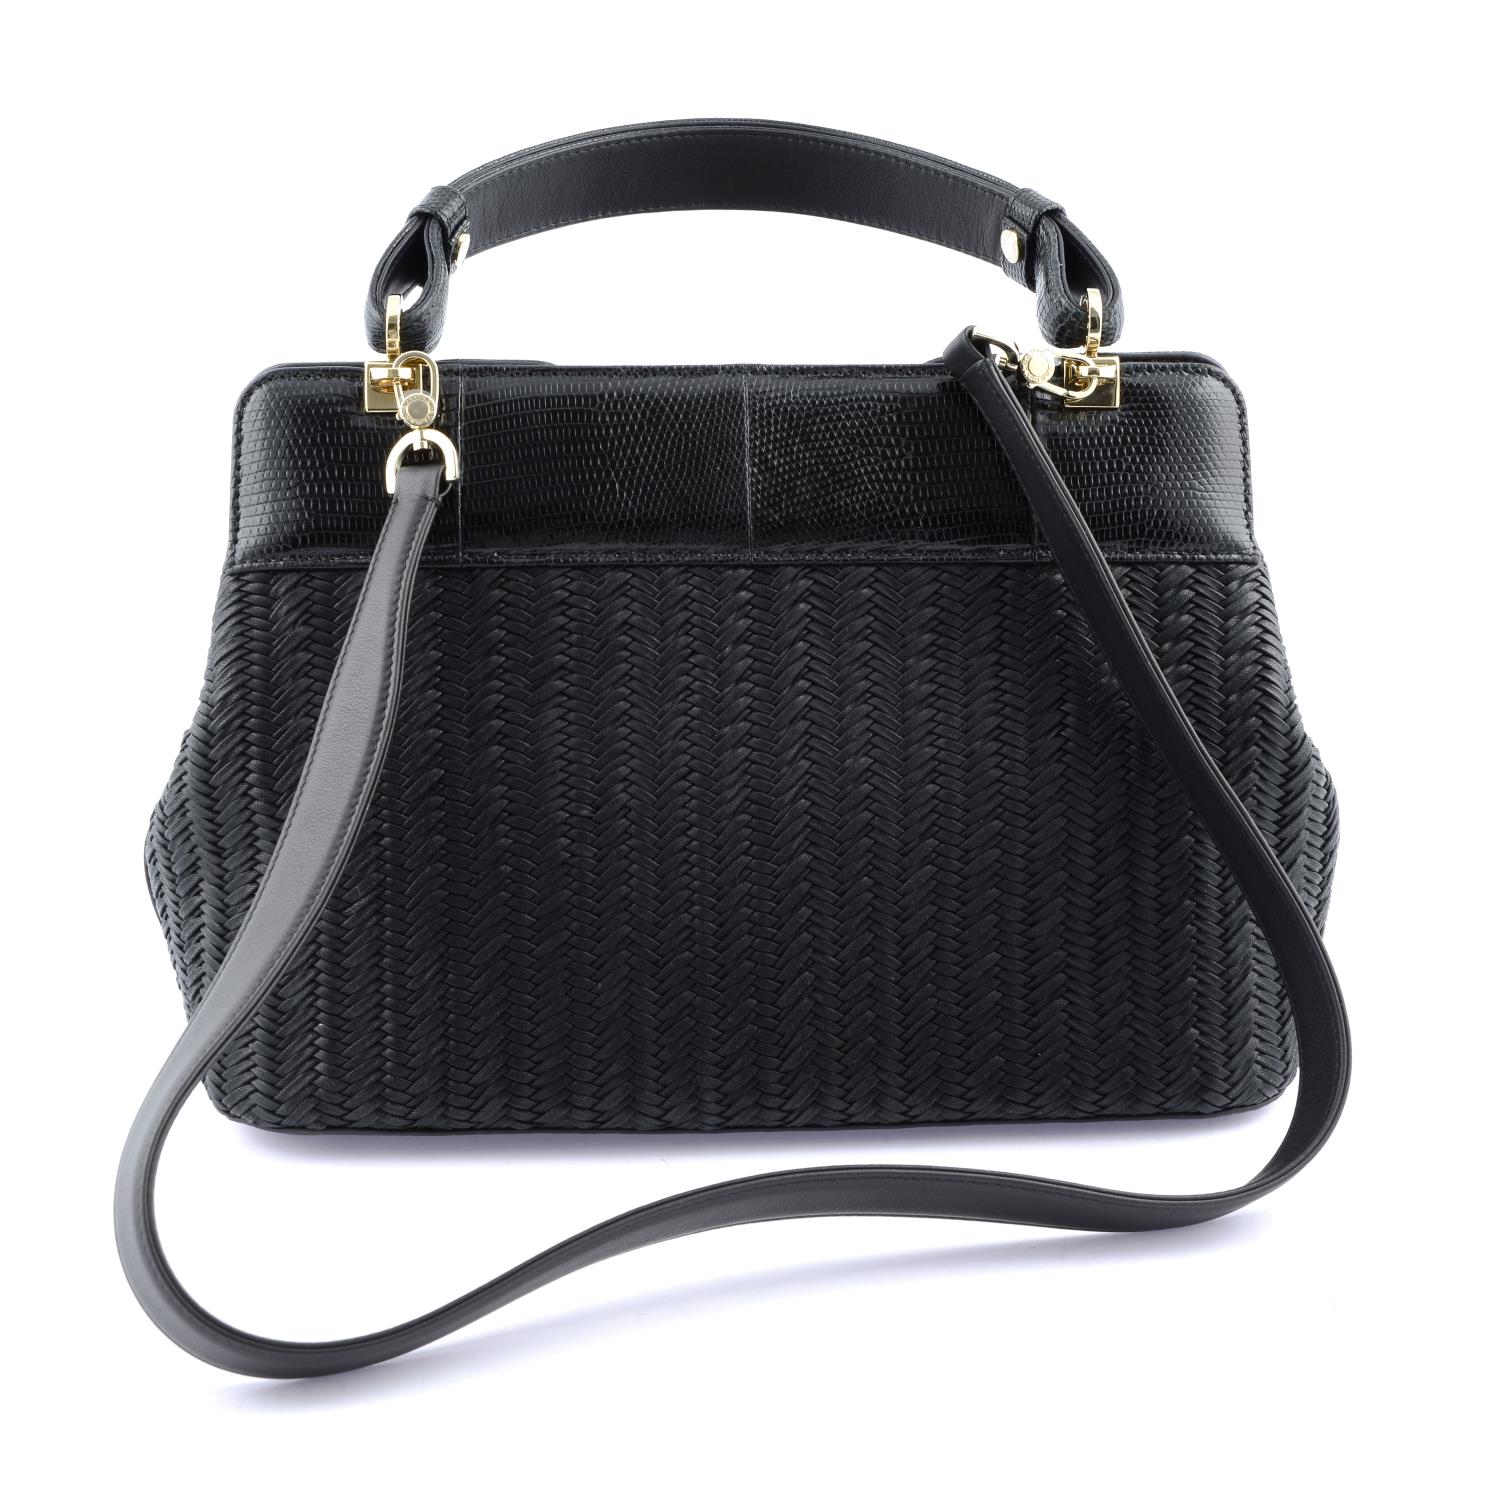 BULGARI - a woven leather Isabella Rossellini handbag. - Image 2 of 5